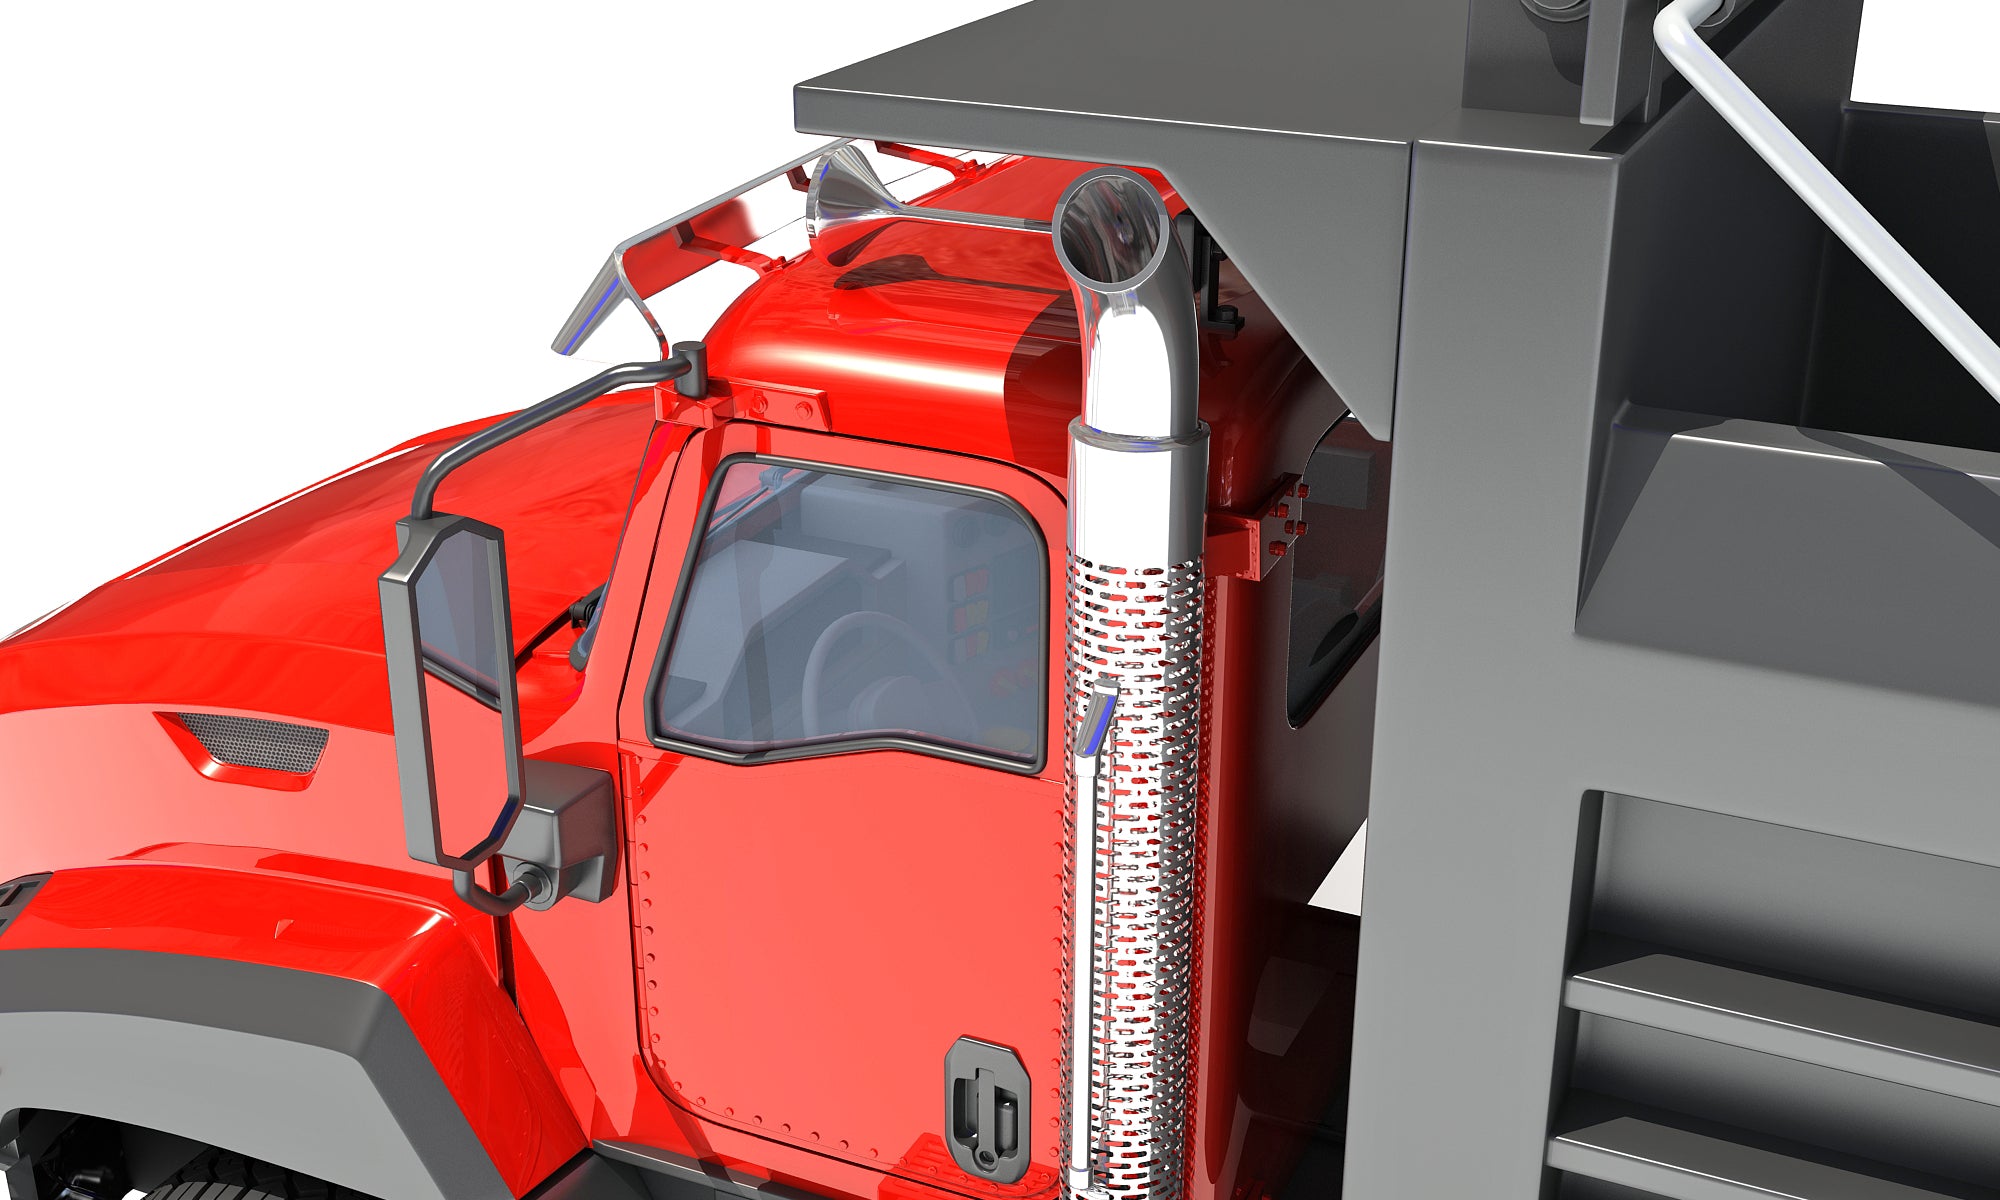 Tipper Truck 3D Model